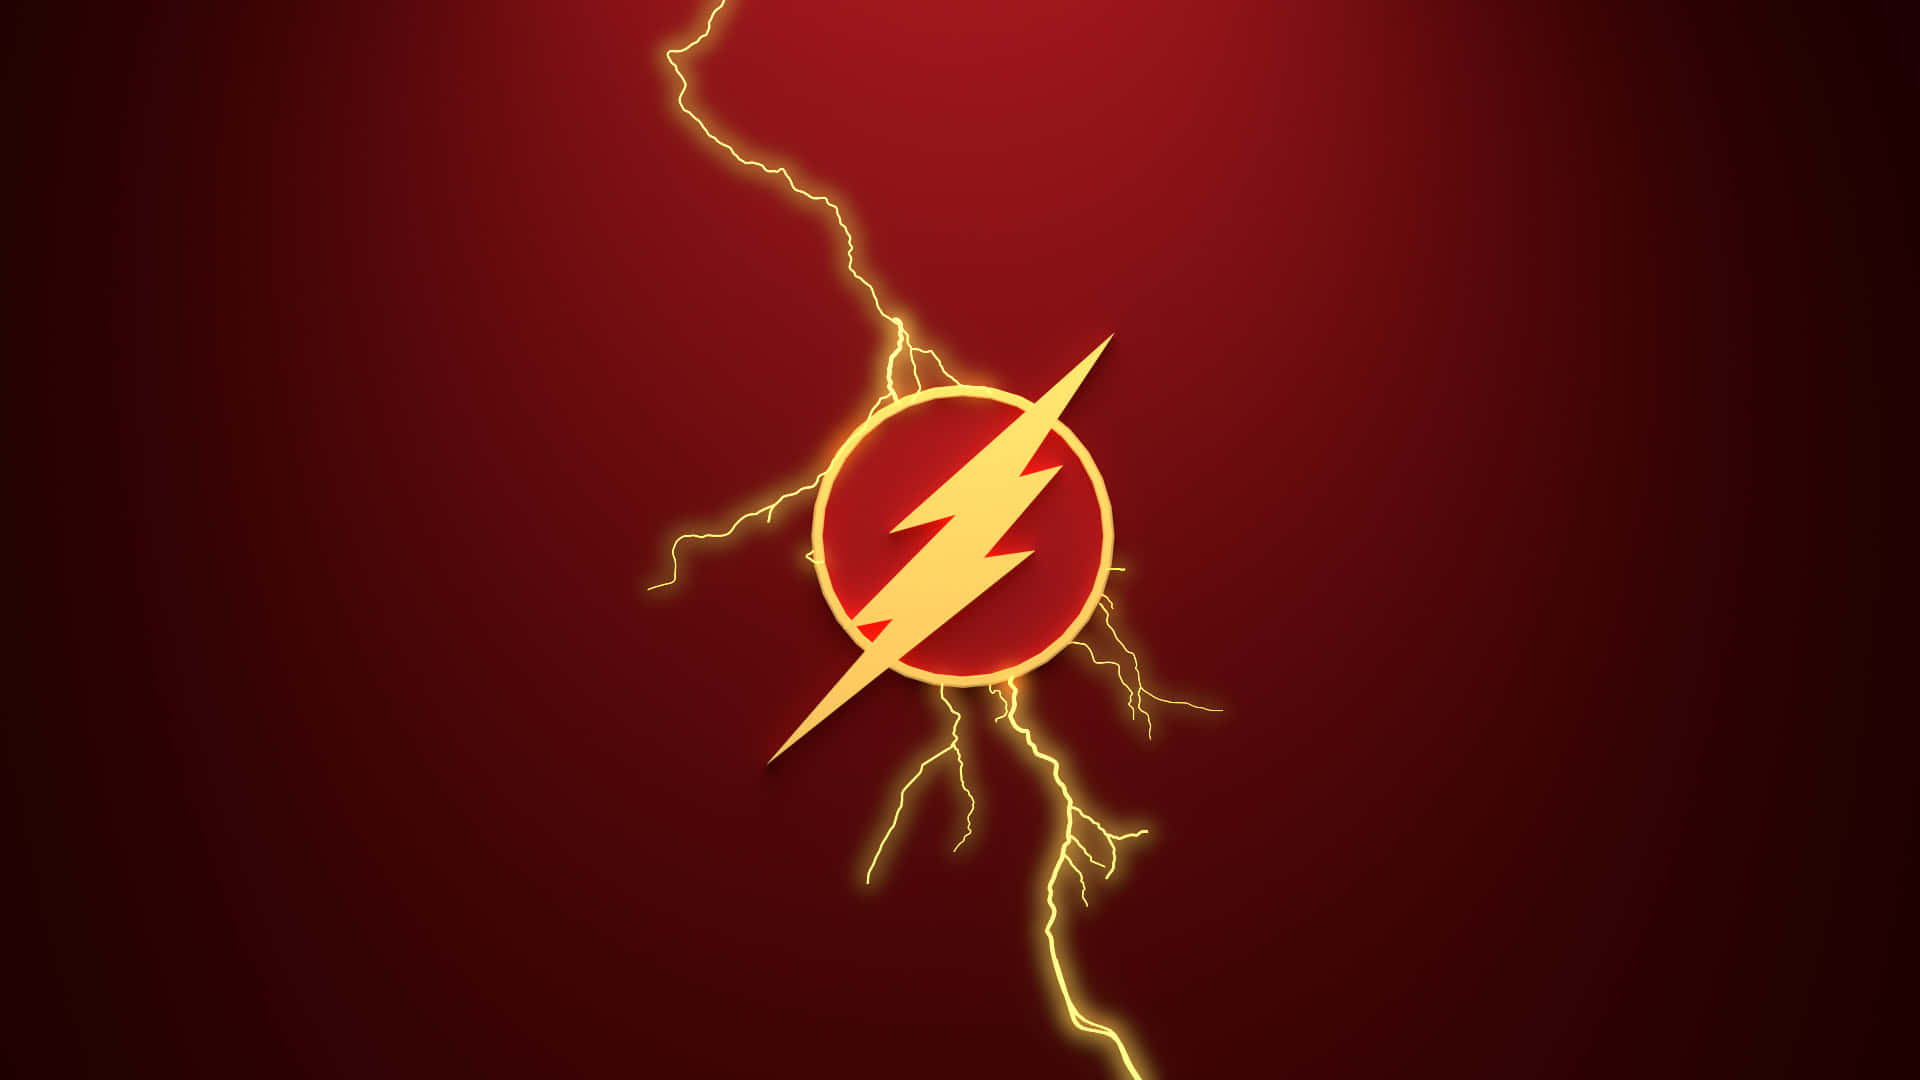 Barry Allen running with The Flash super-speed